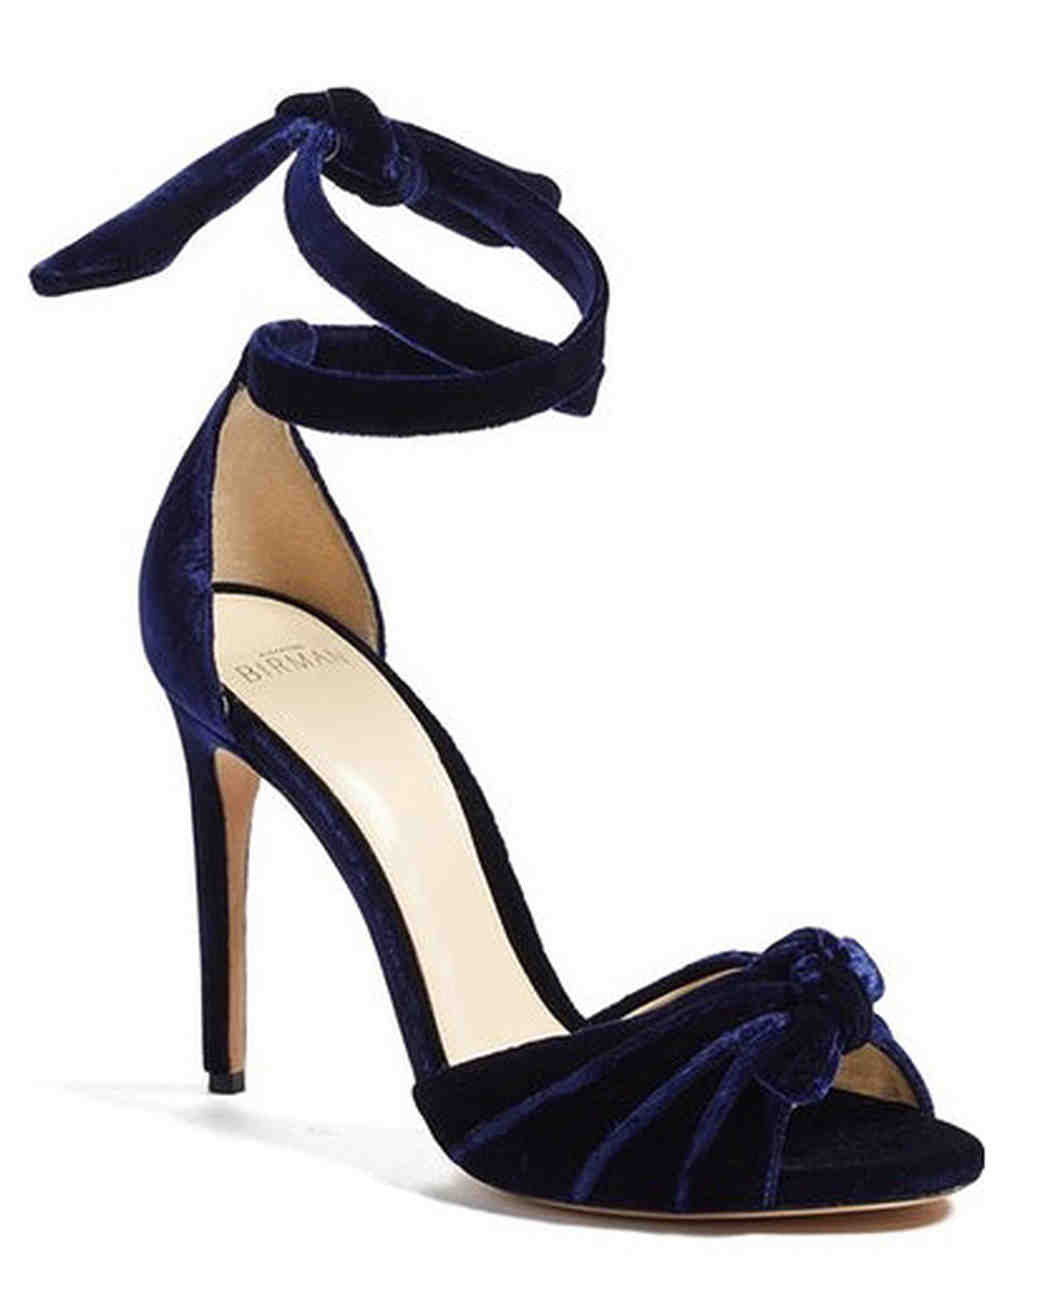 Something-blue-shoes-alexandre-birman-ankle-lace-up-0816_vert